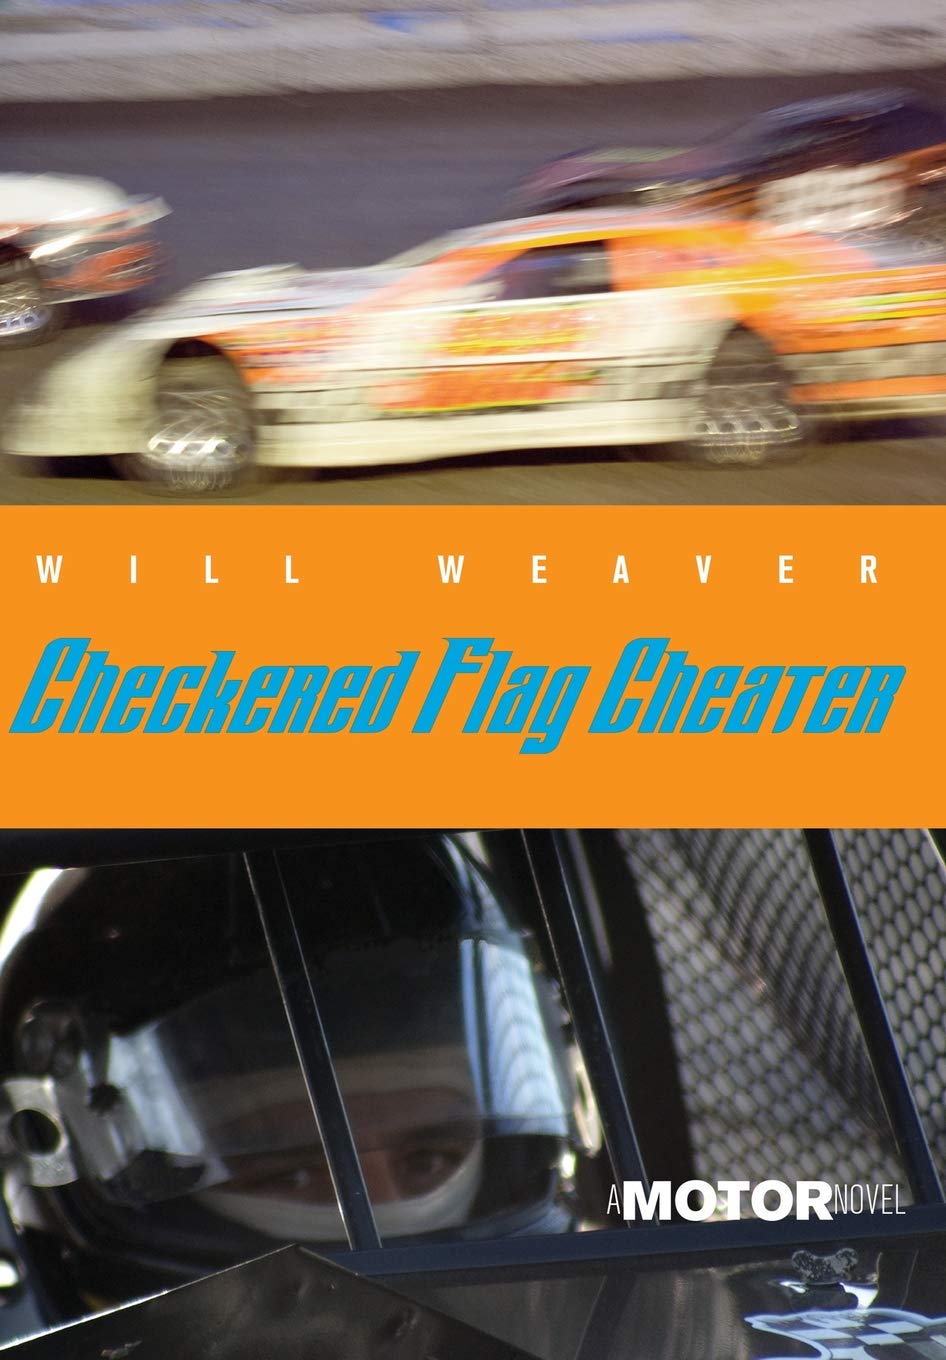 Checkered Flag Cheater: A Motor Novel